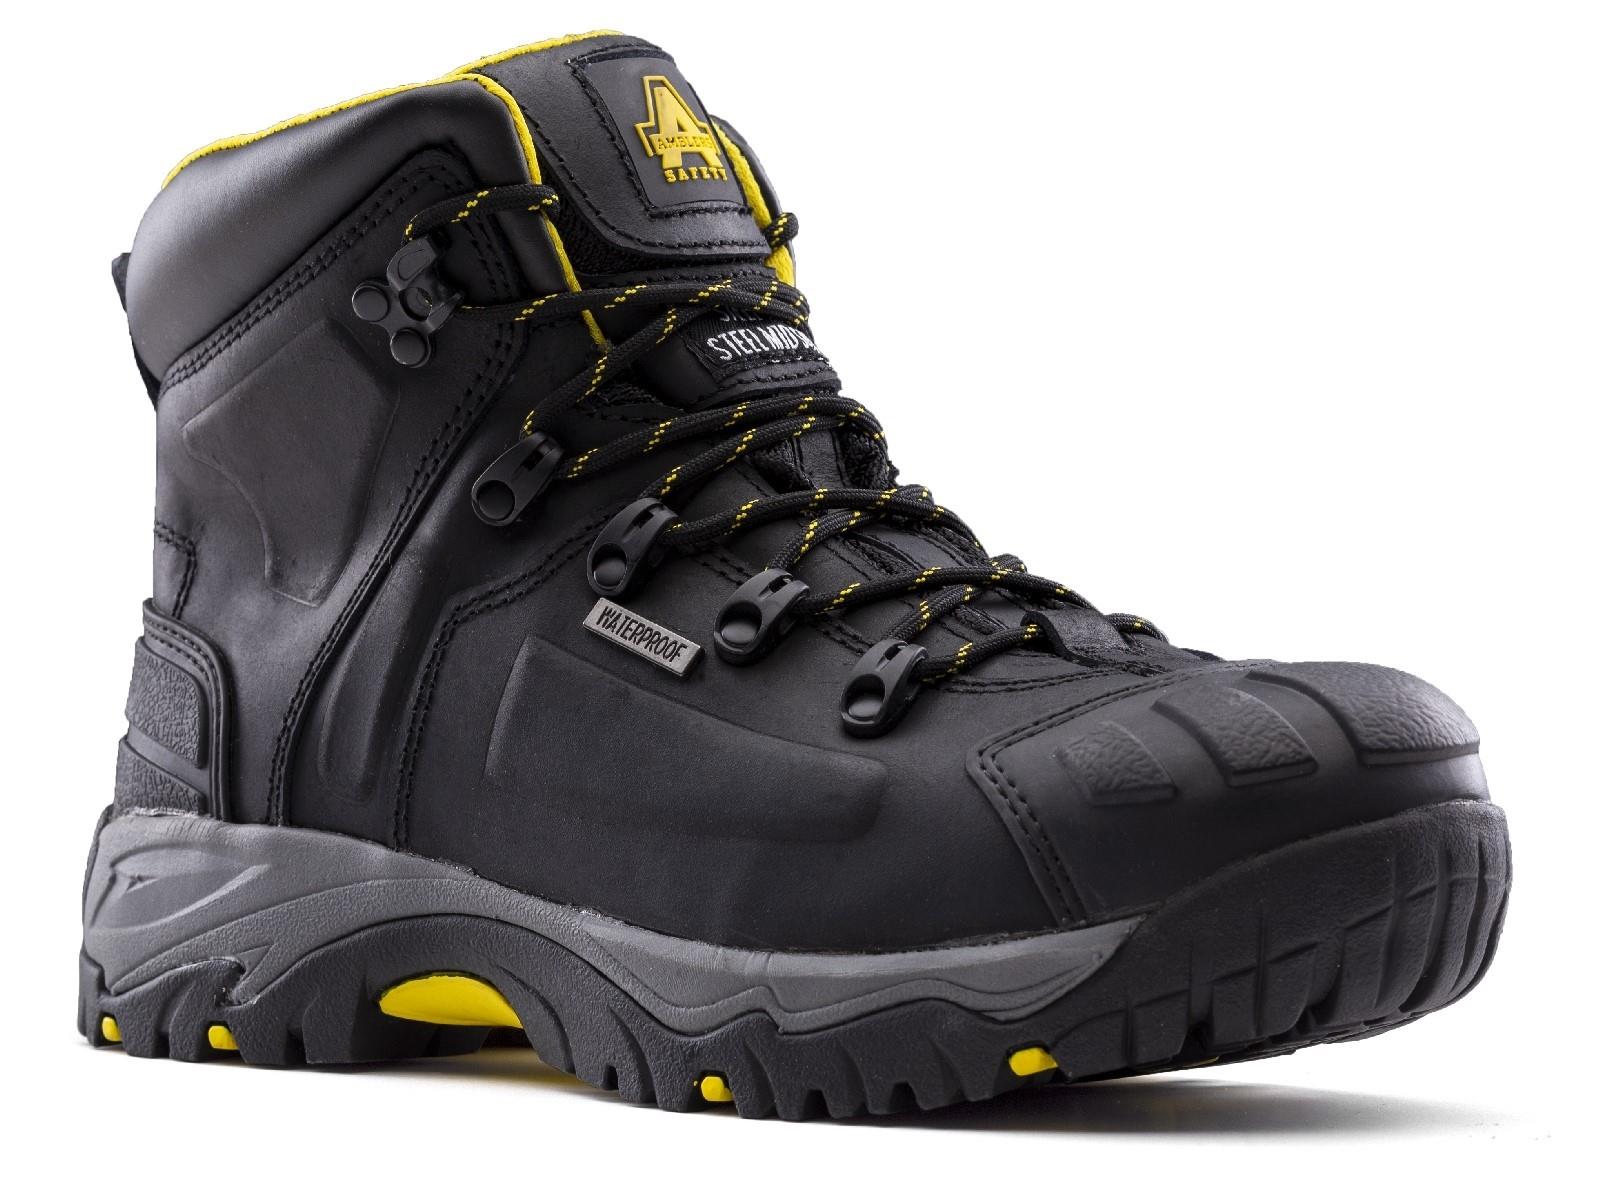 Amblers S3 black EE wide-fit waterproof steel toe/midsole safety boot #AS803